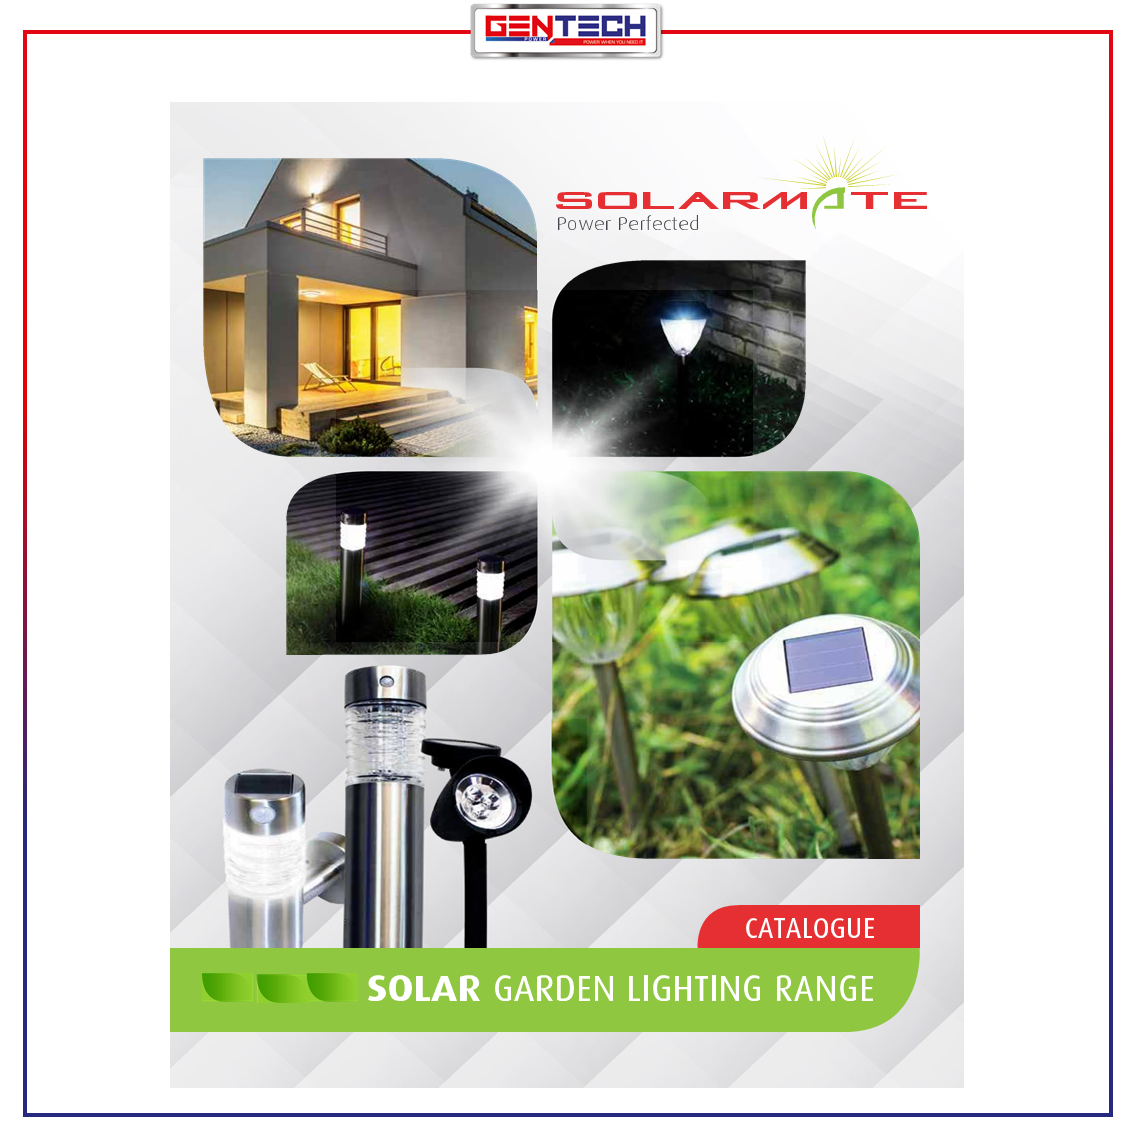 GENTECH - Solarmate catalogue Catalogue